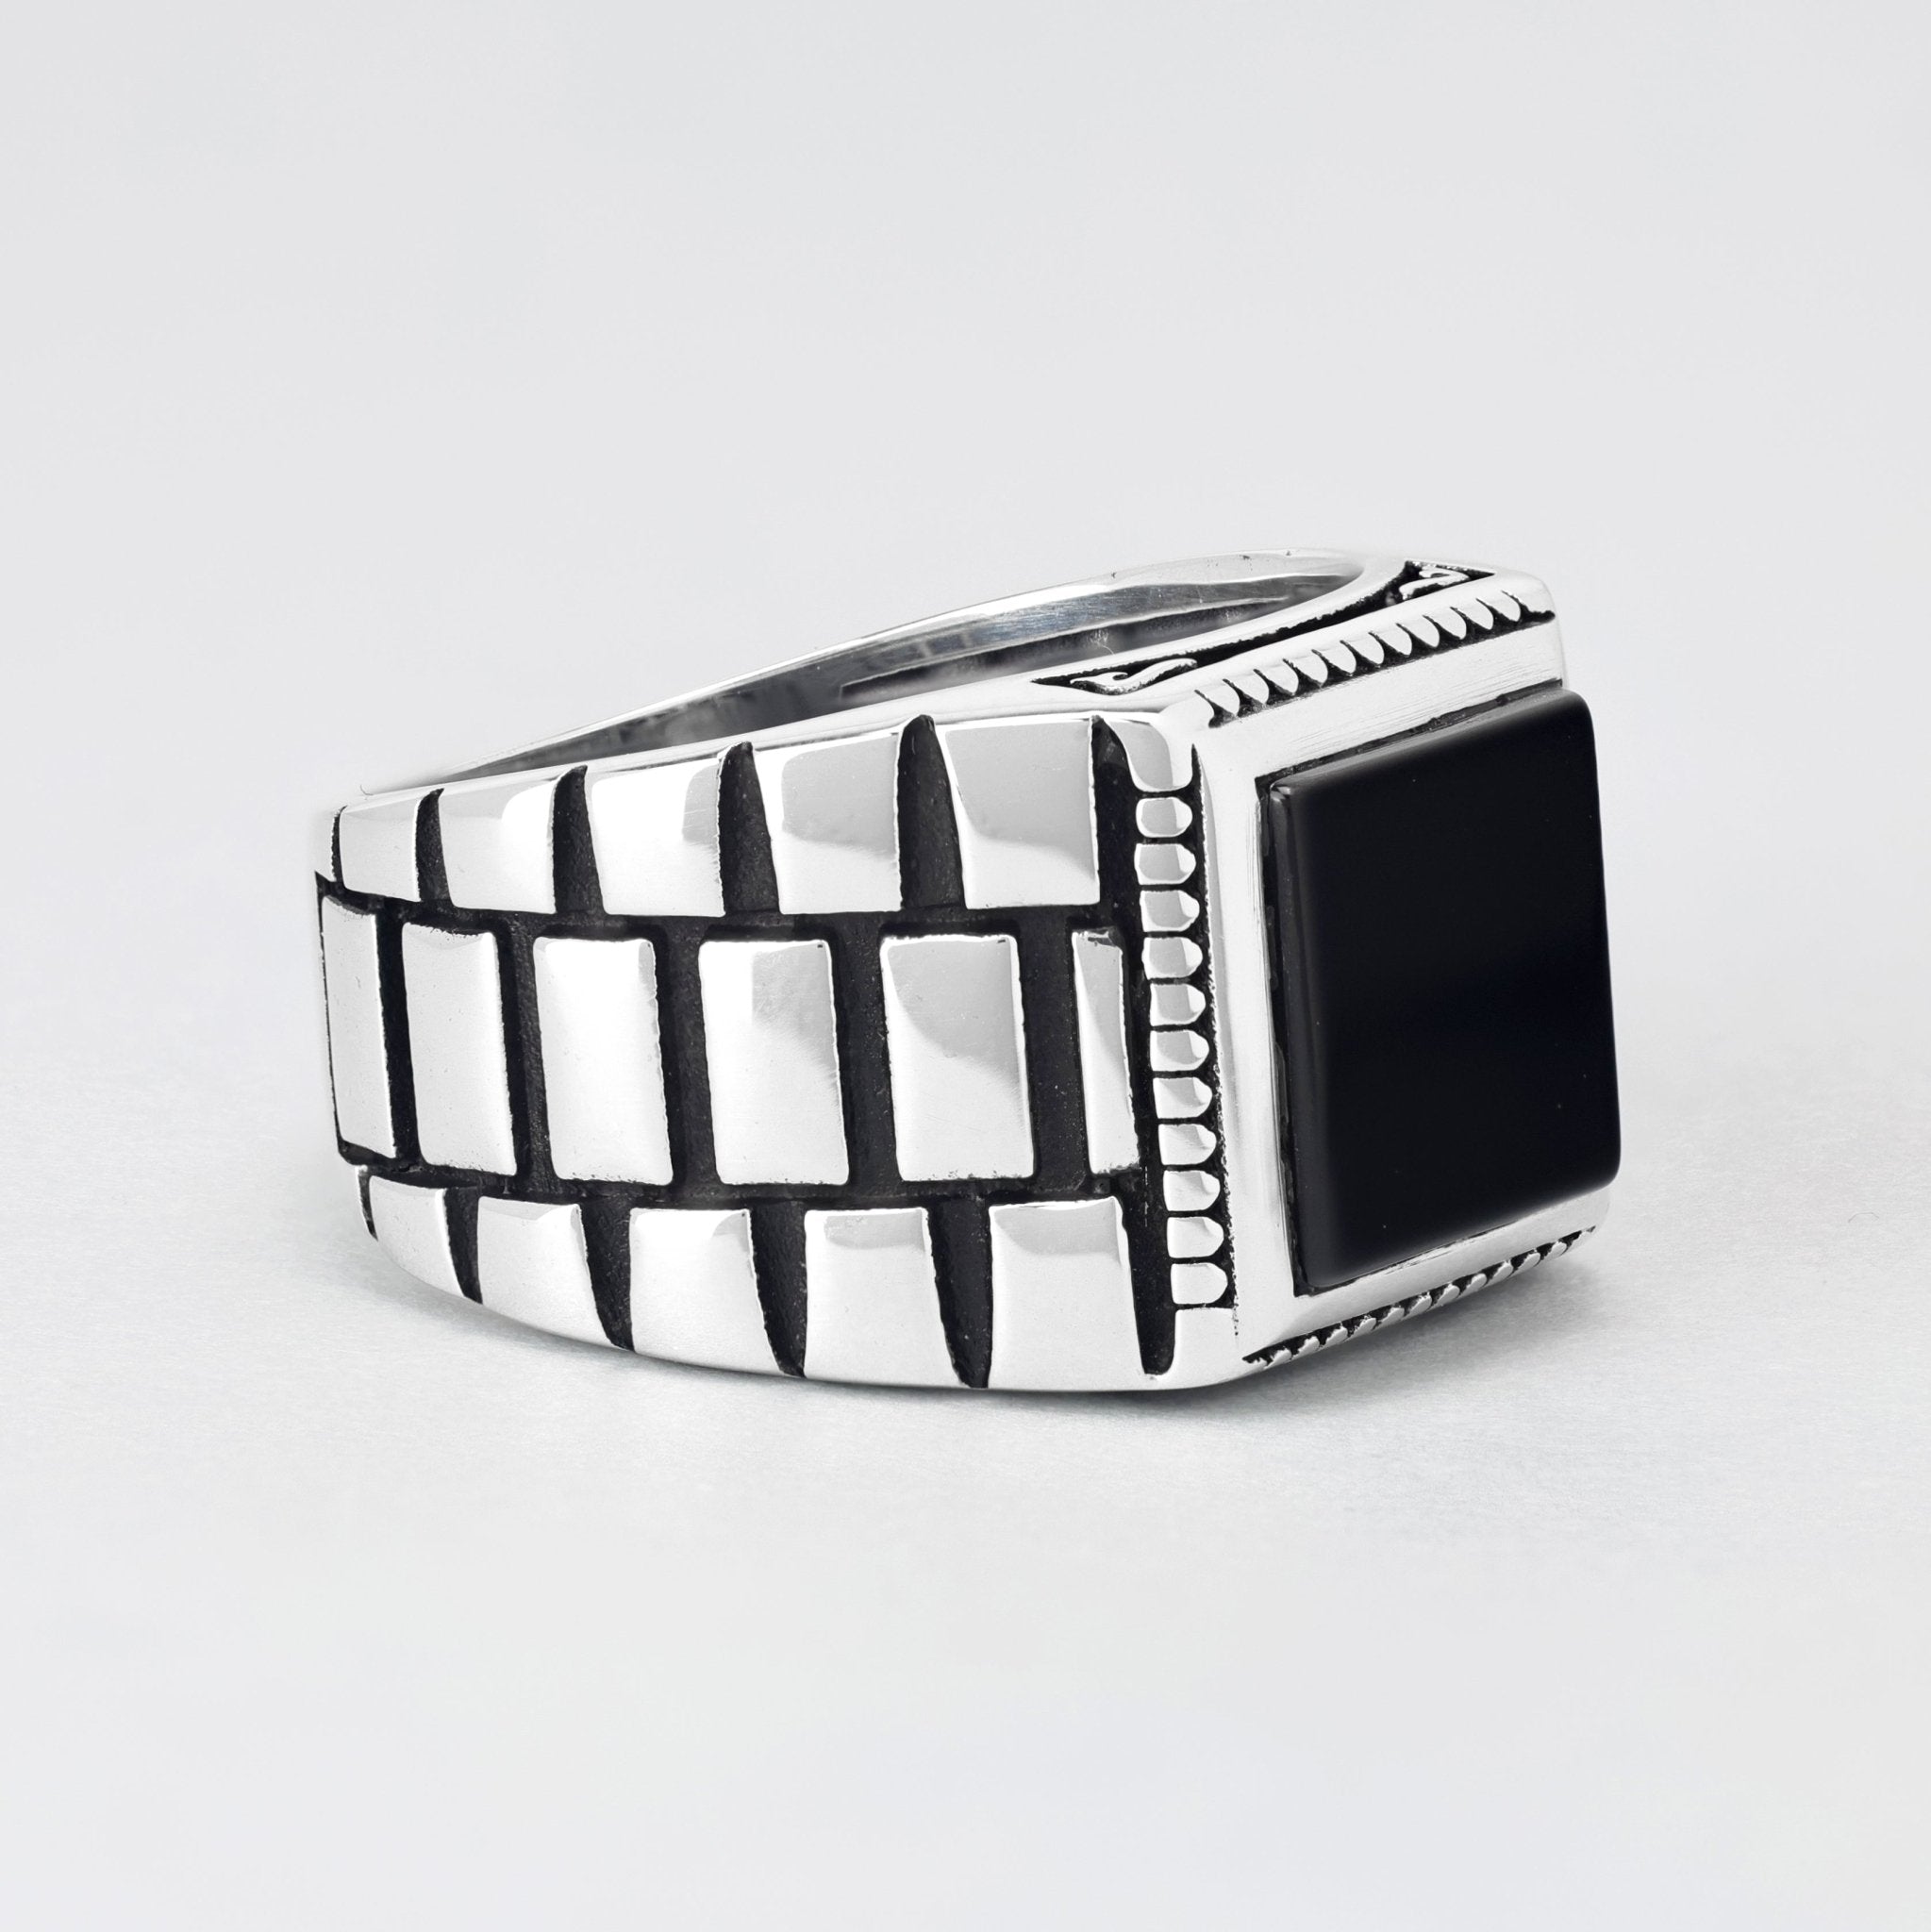 Chimoda Watch Design Sterling Silver Ring for Men Onyx Stone